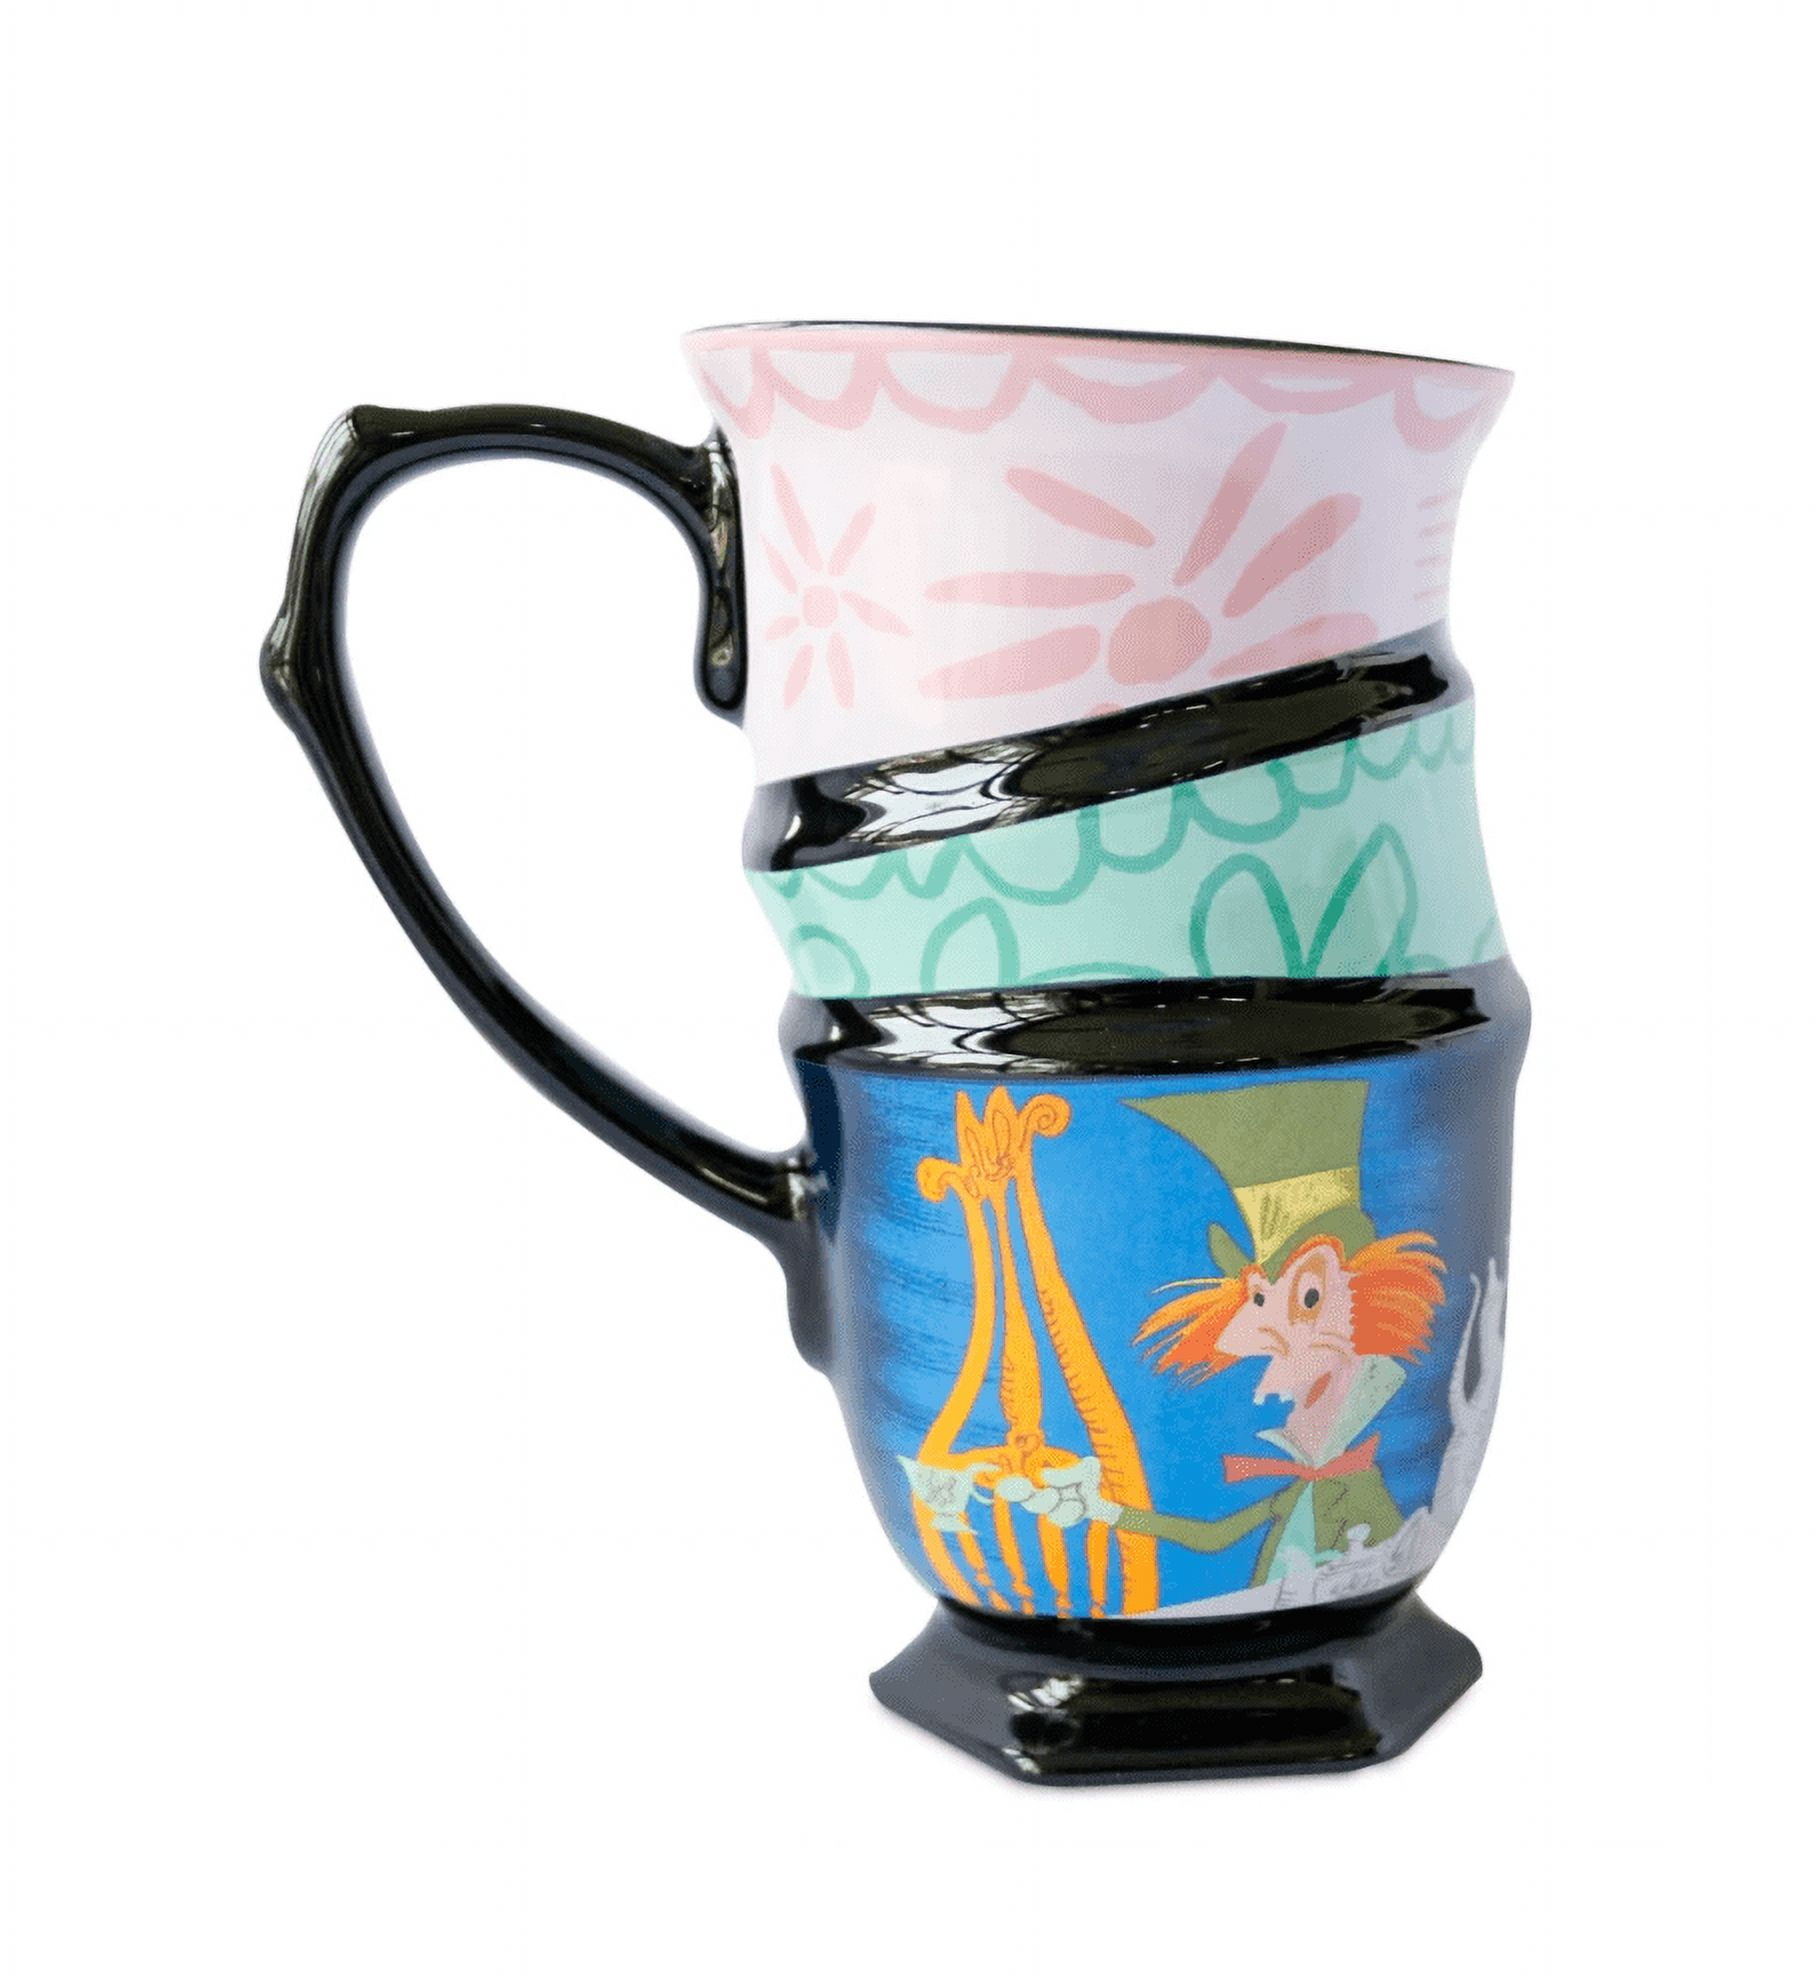  Disney Half Moon Bay Alice in Wonderland Shaped Mug - Door Knob  - 3D Mug - Alice in Wonderland Gifts - Office Mug : Home & Kitchen